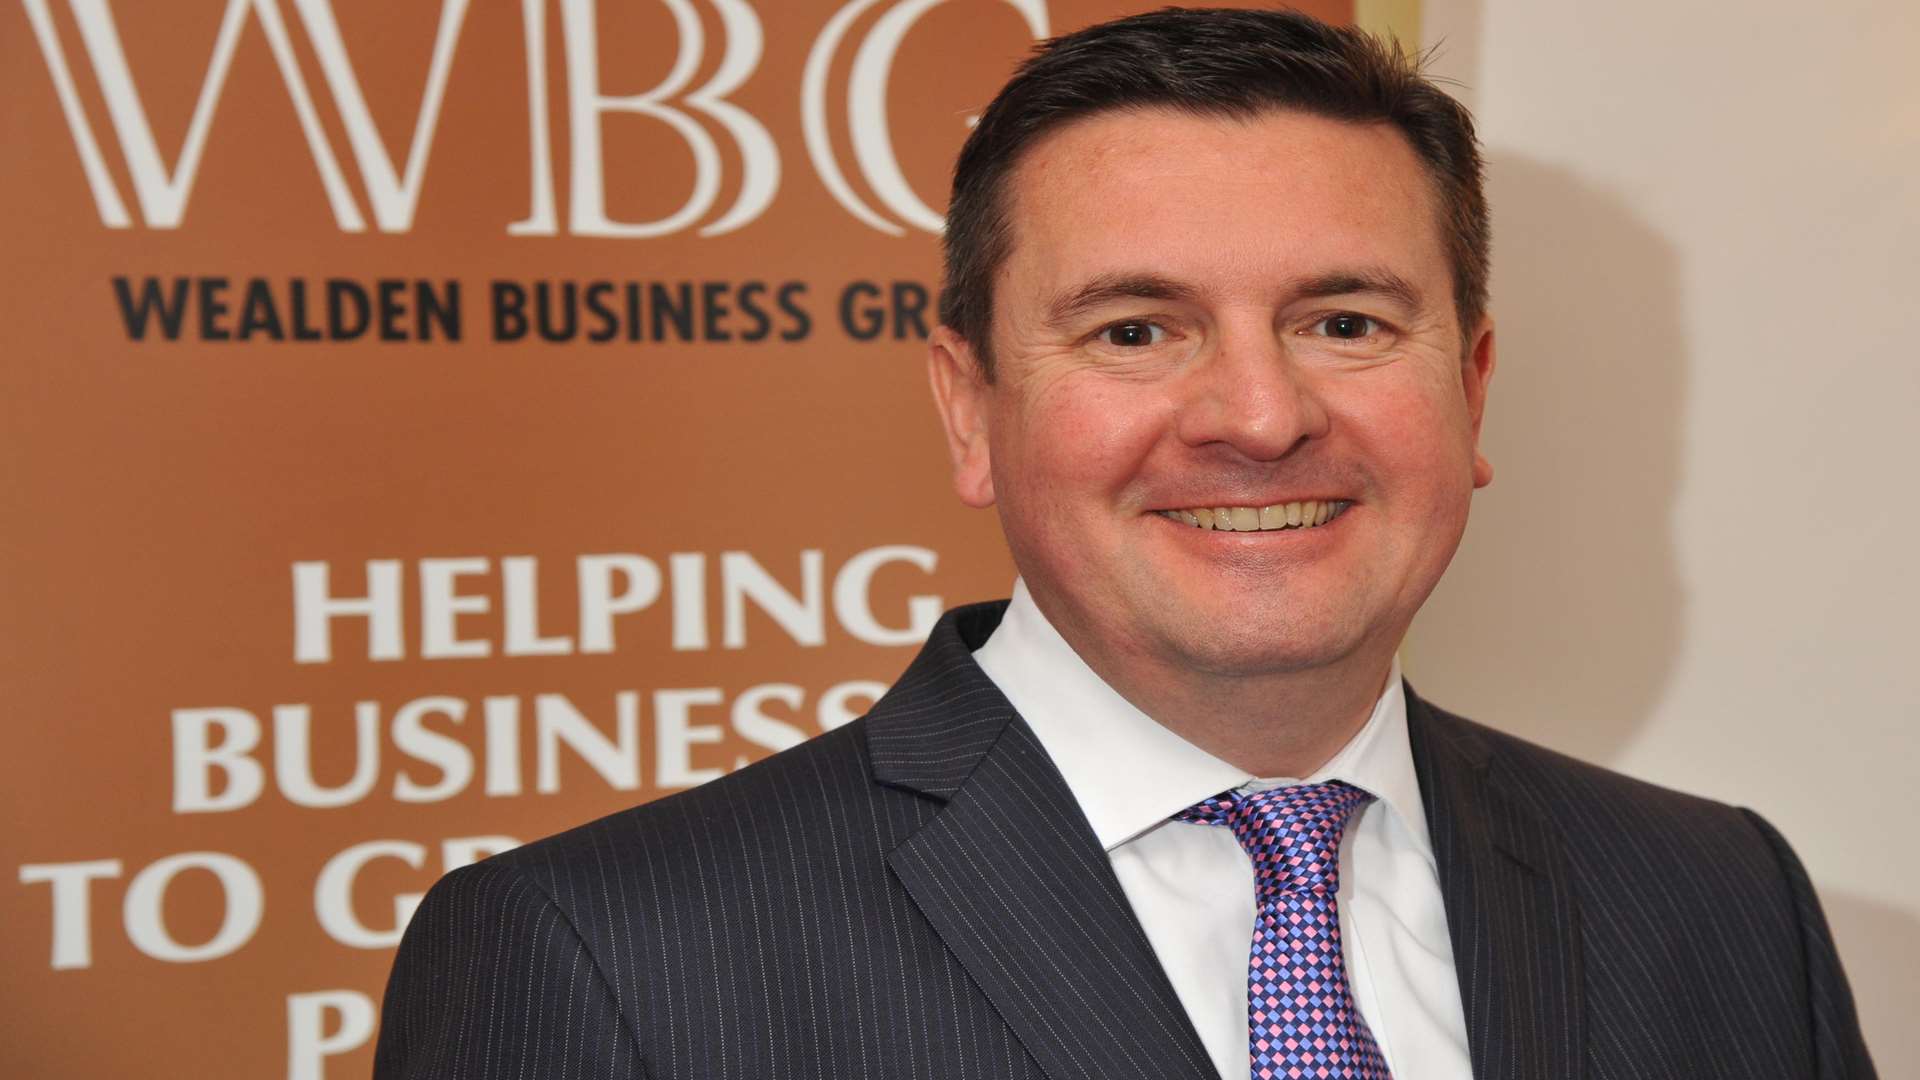 Wealden Business Group's new chairman Simon Hammond